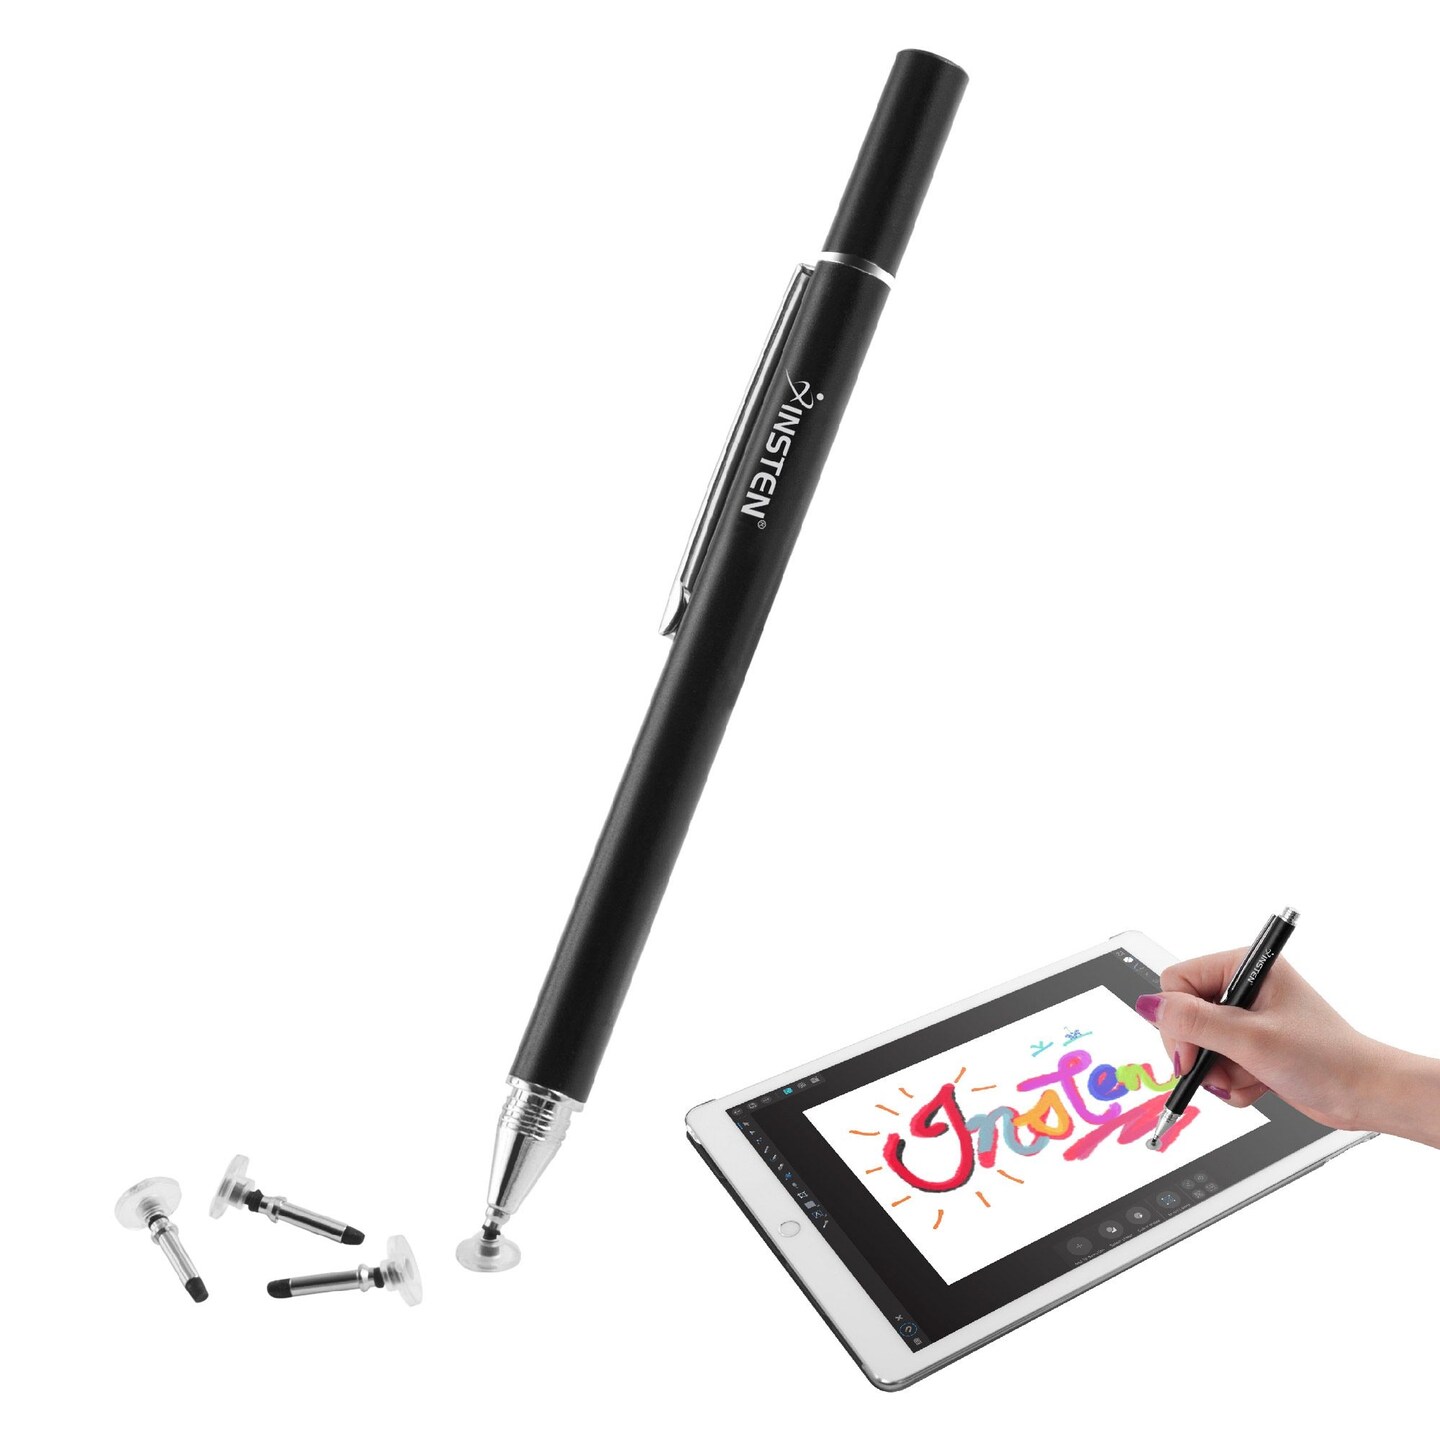 Stylus Pens: Touch Screen Pen for Tablets & Laptops